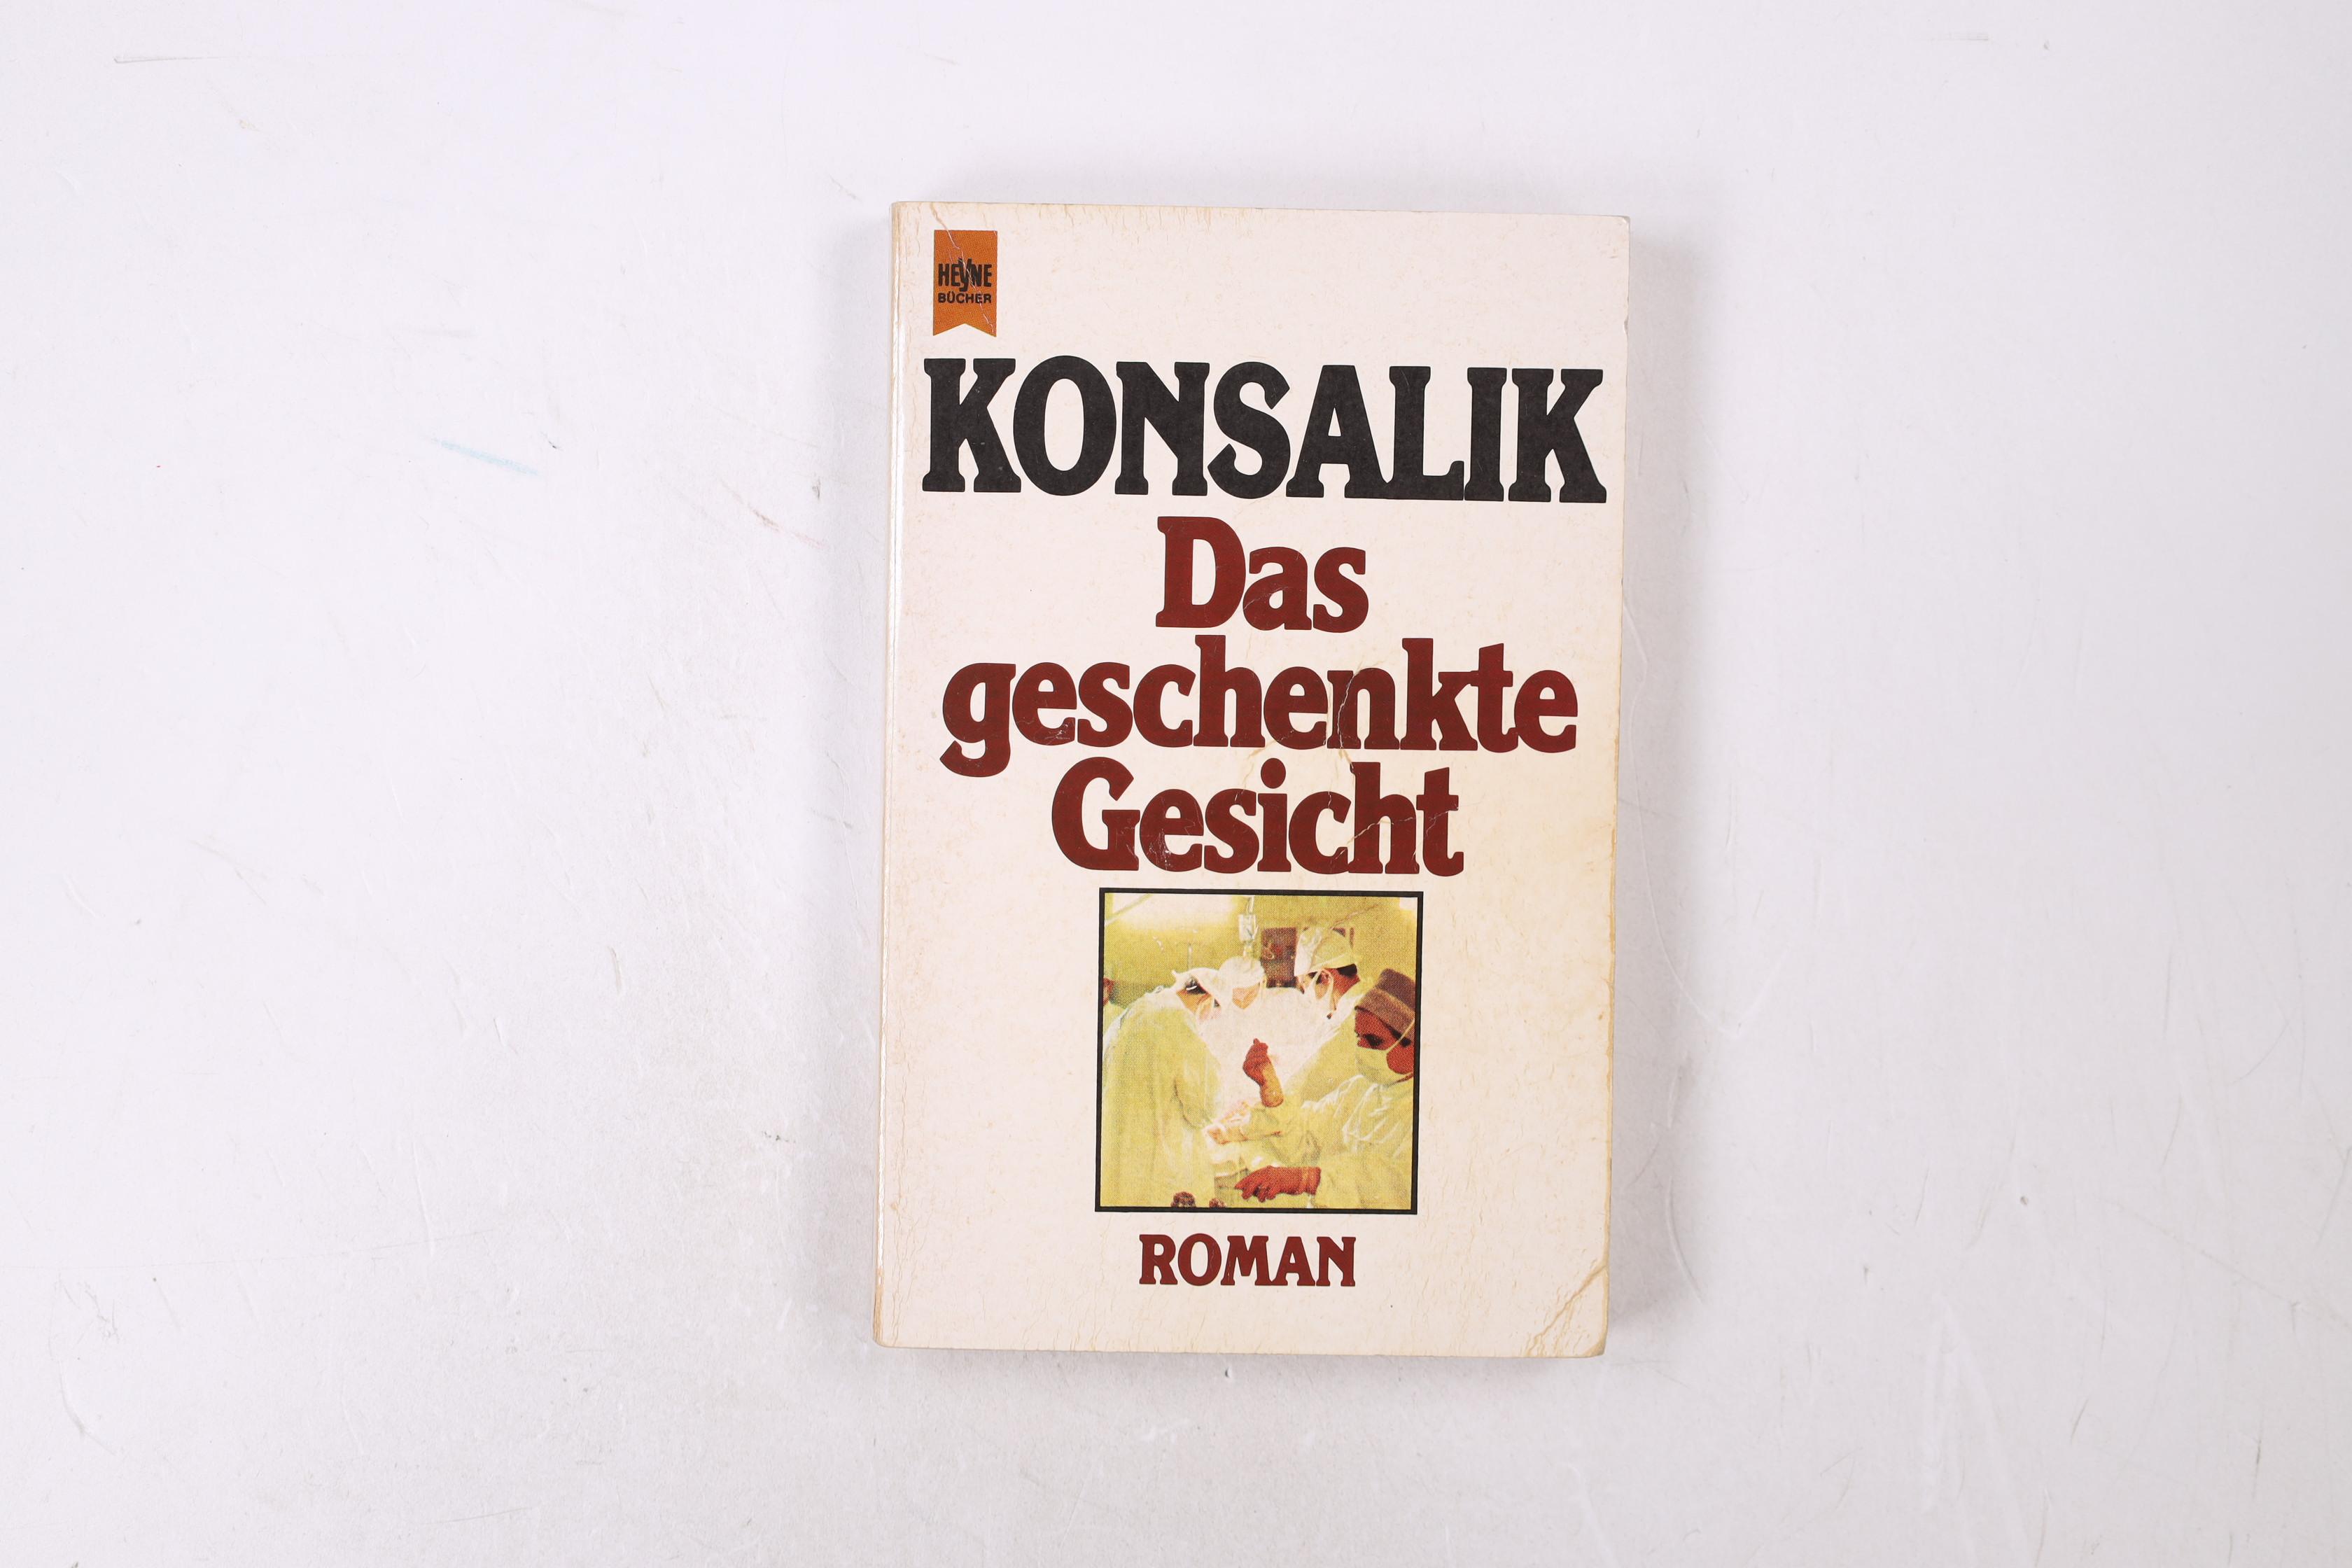 DAS GESCHENKTE GESICHT. Roman - Konsalik, Heinz G.